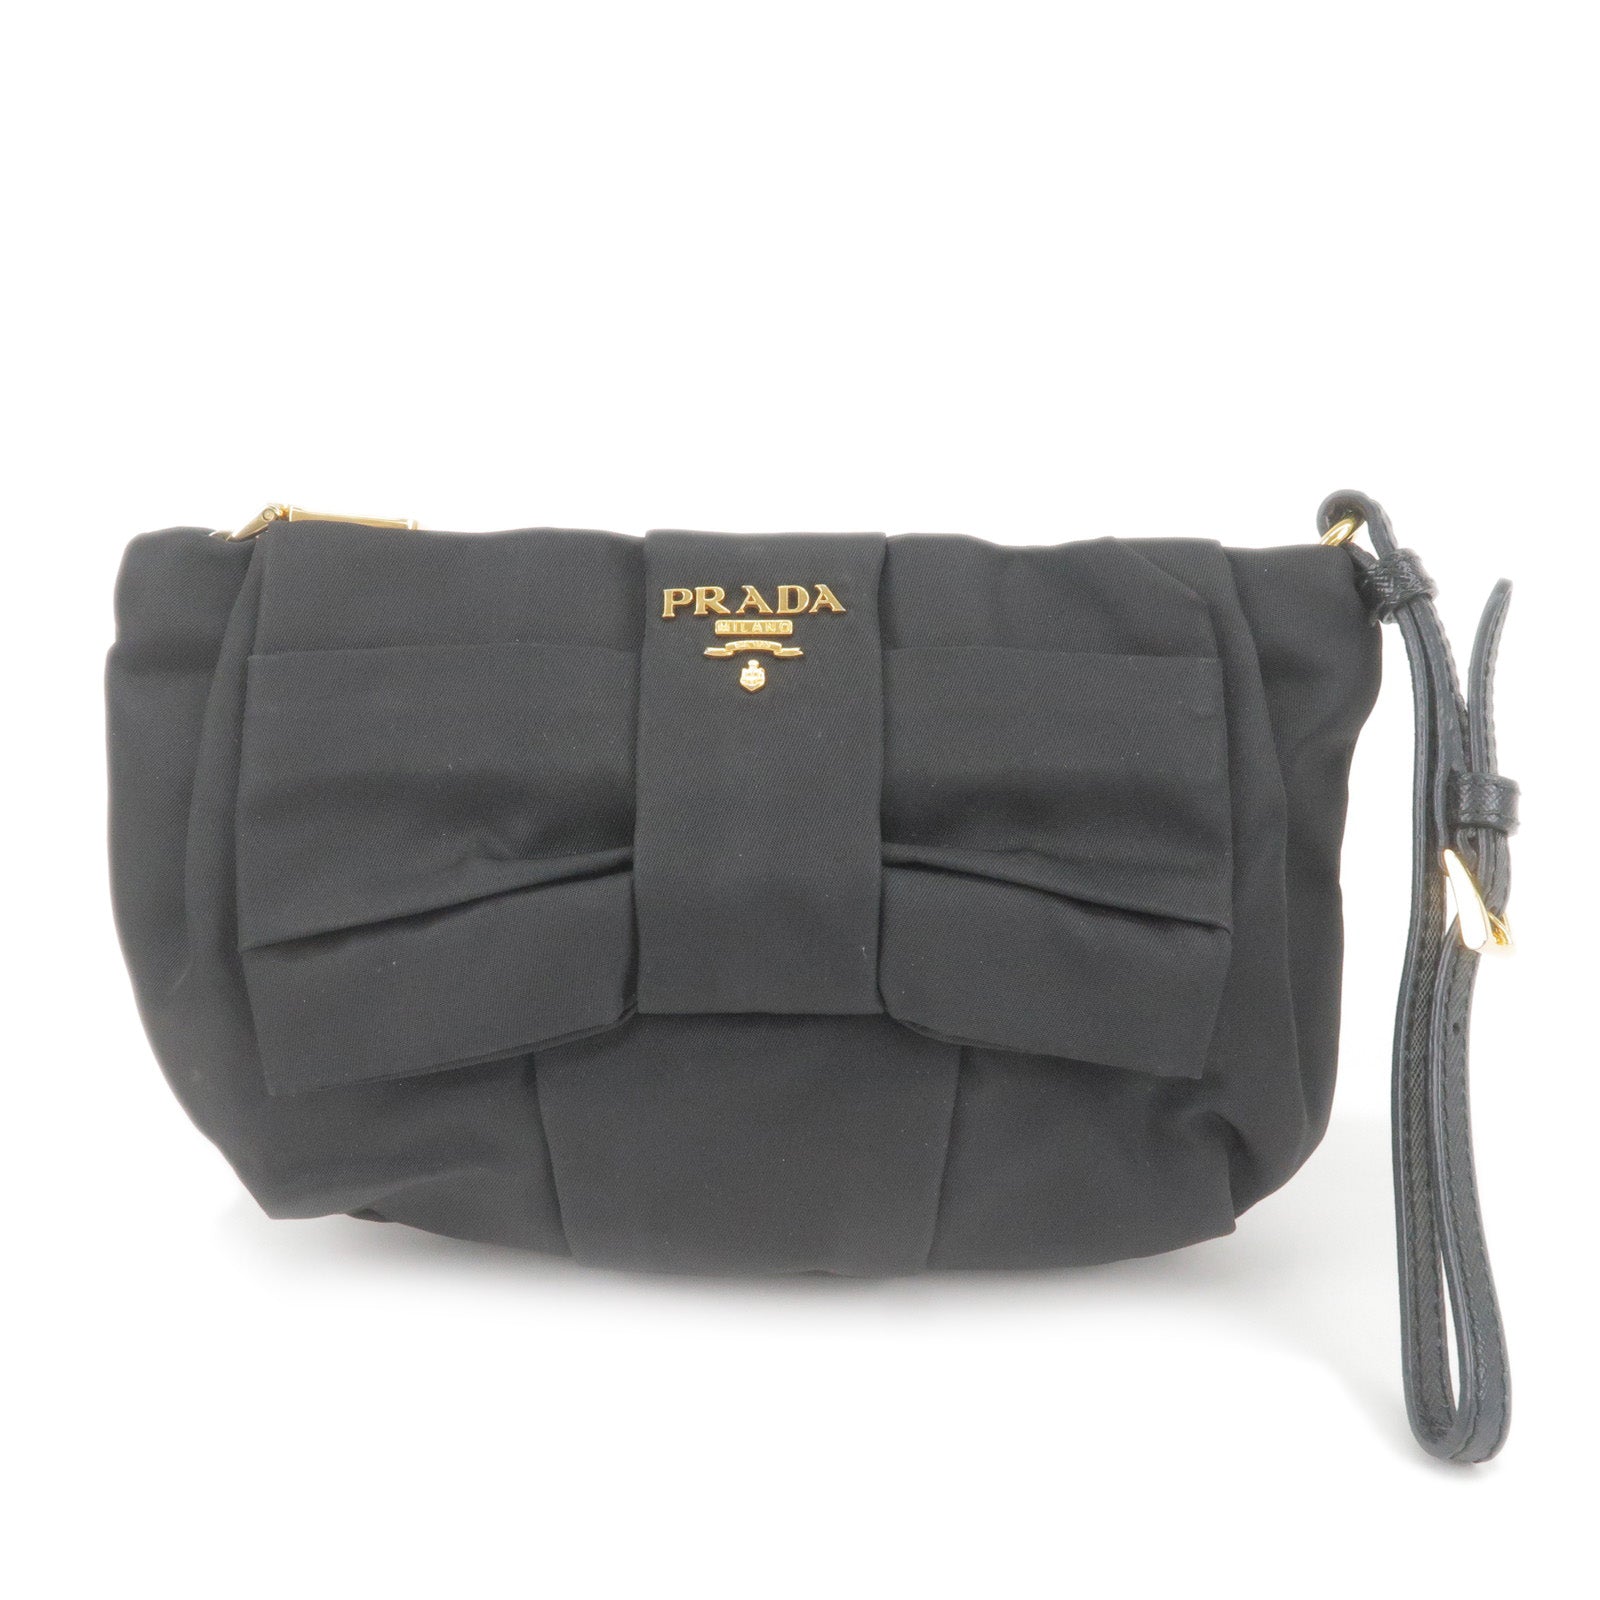 PRADA-Logo-Nylon-Leather-Pouch-Clutch-Bag-Wristlet-Black-1N1422